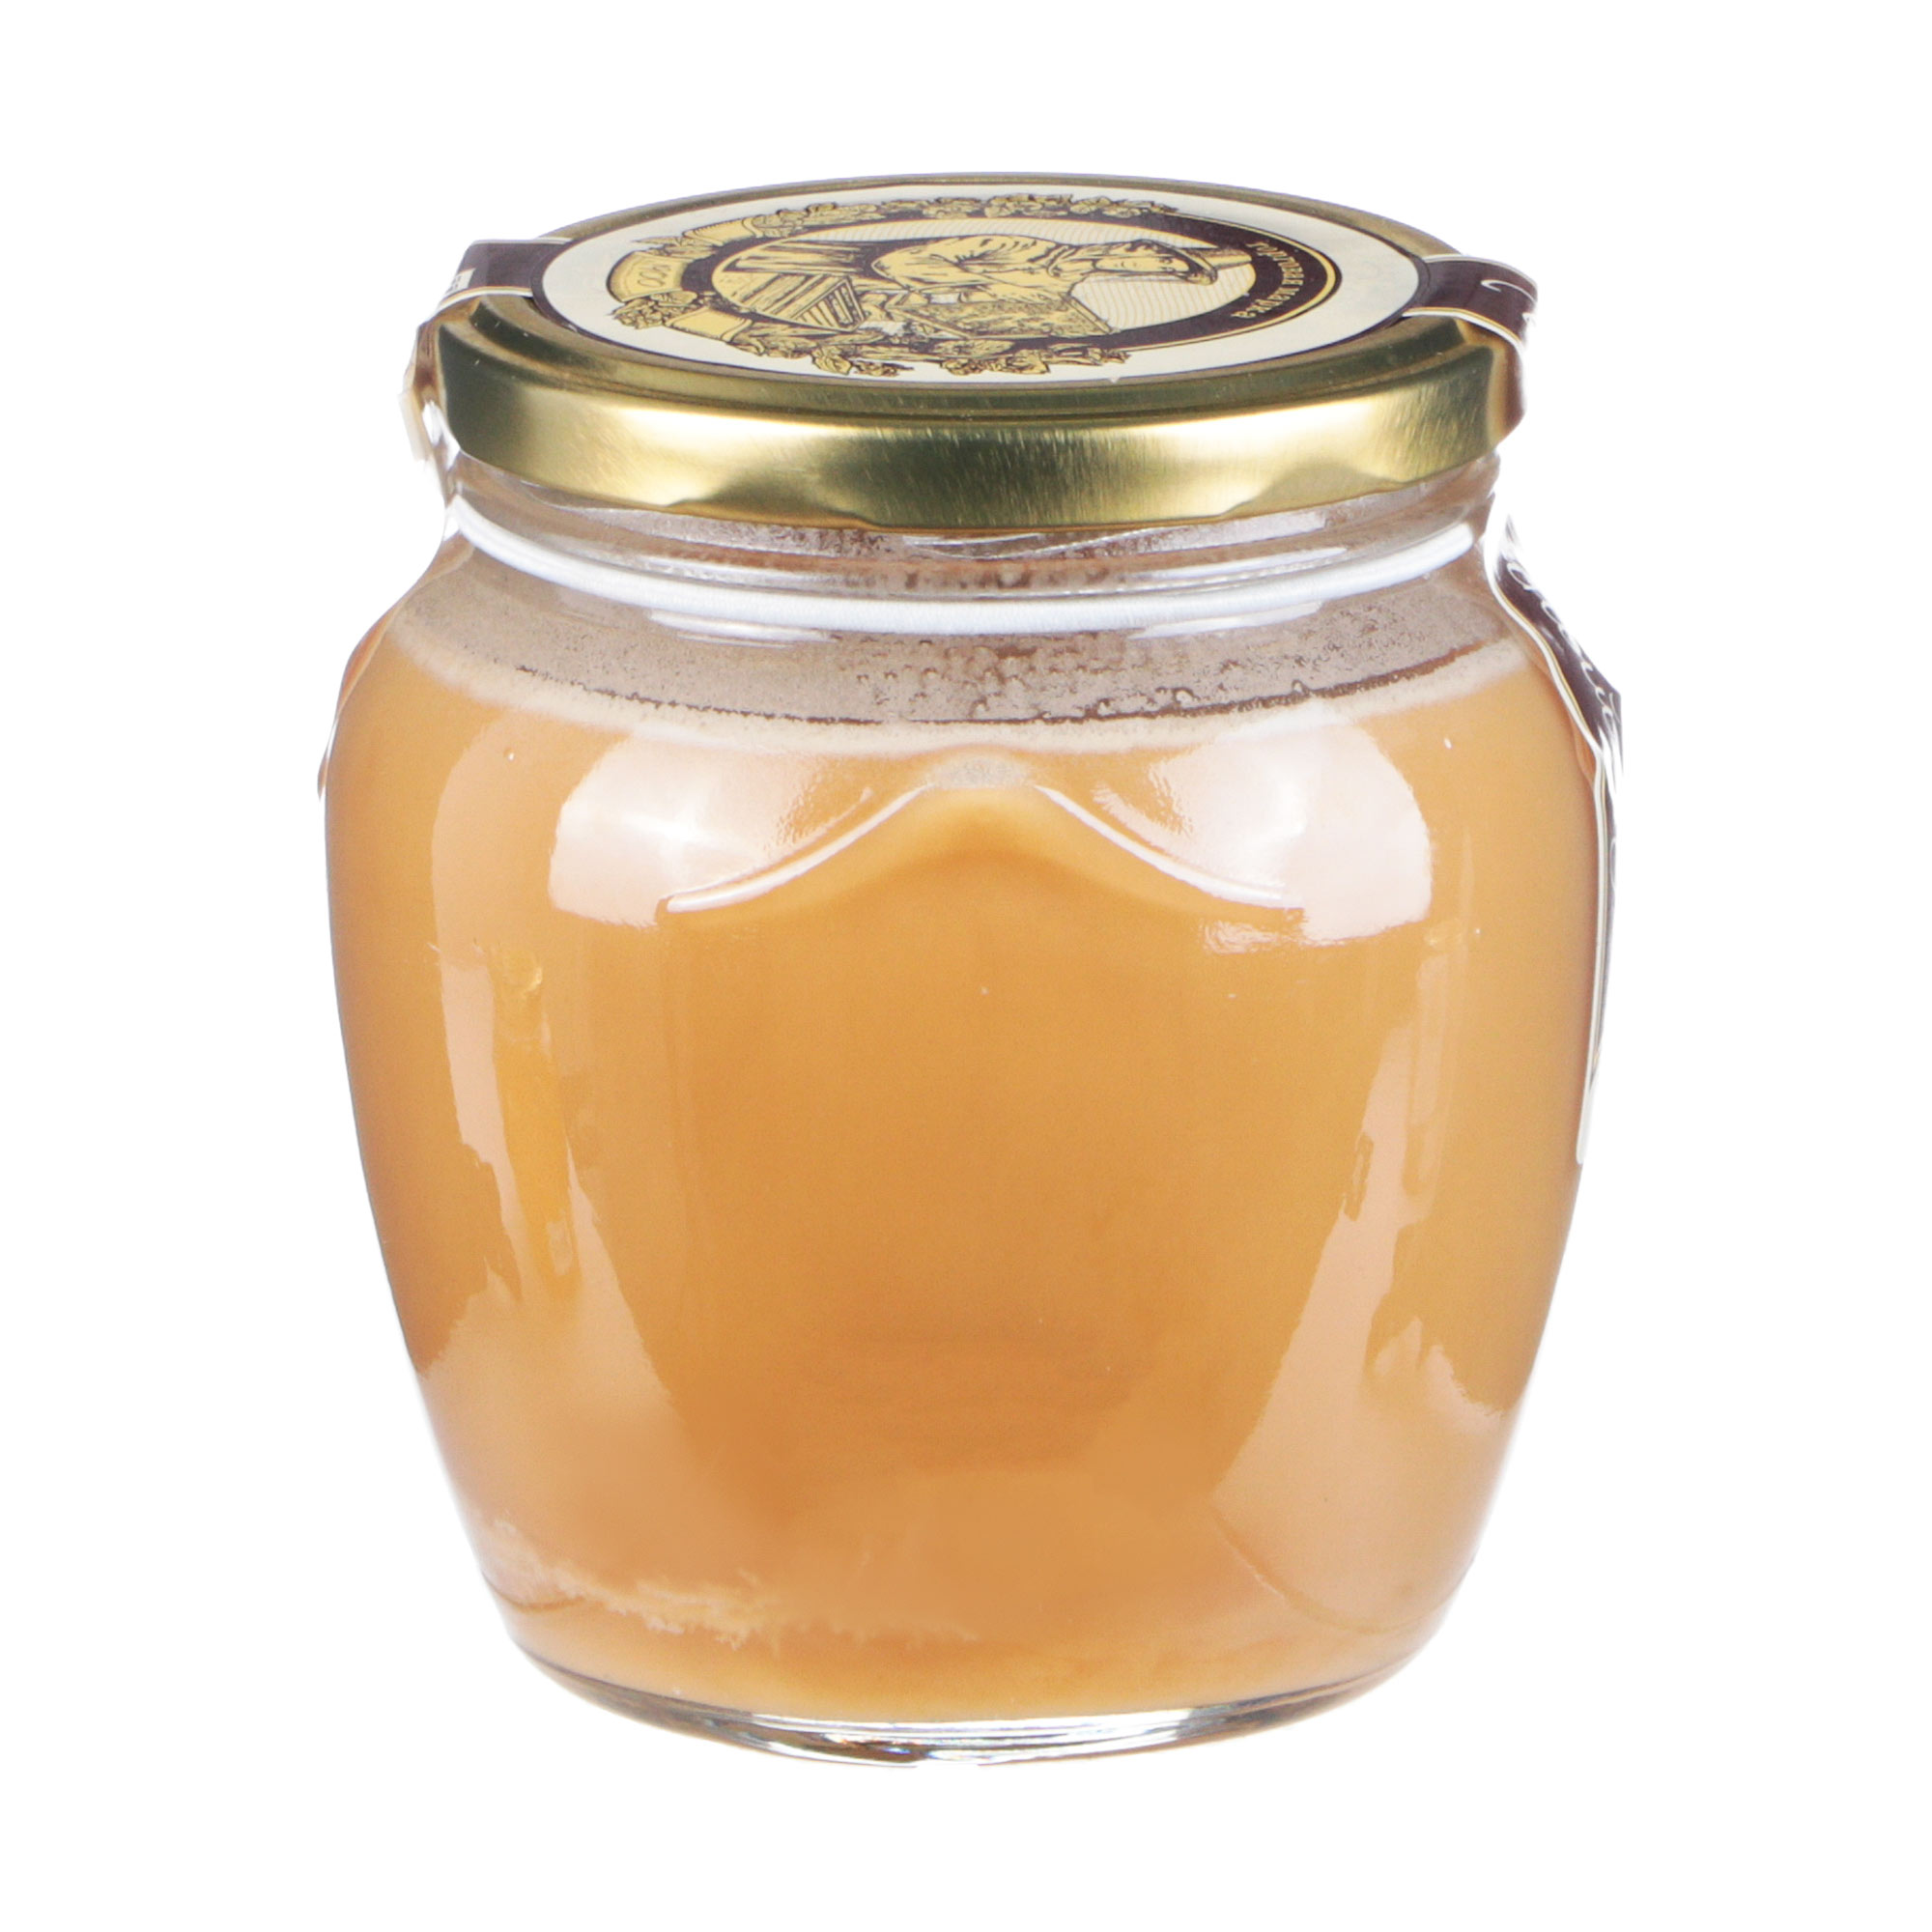 Мед Башкирские Пасеки Амфора цветочный, 650 г мед башкирские пасеки цветочный мёд ж б 550 г